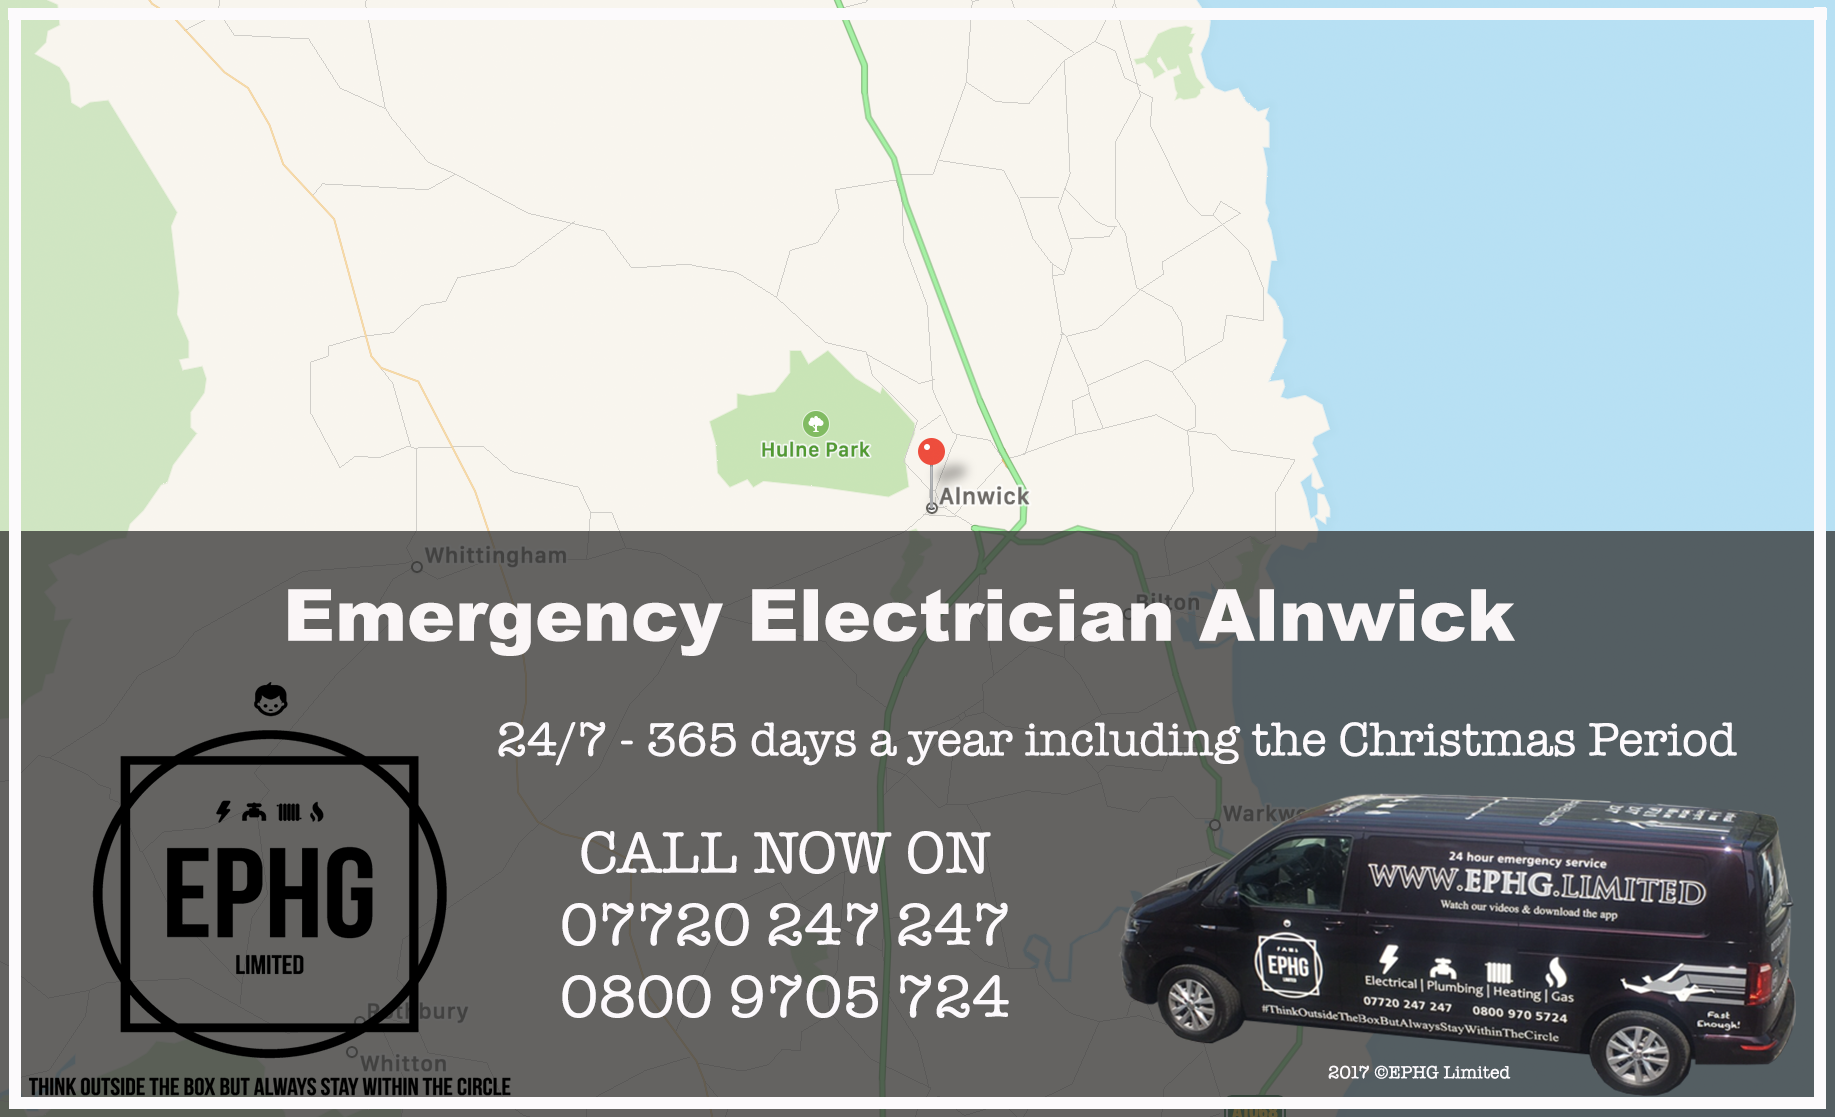 Emergency Electrician Alnwick